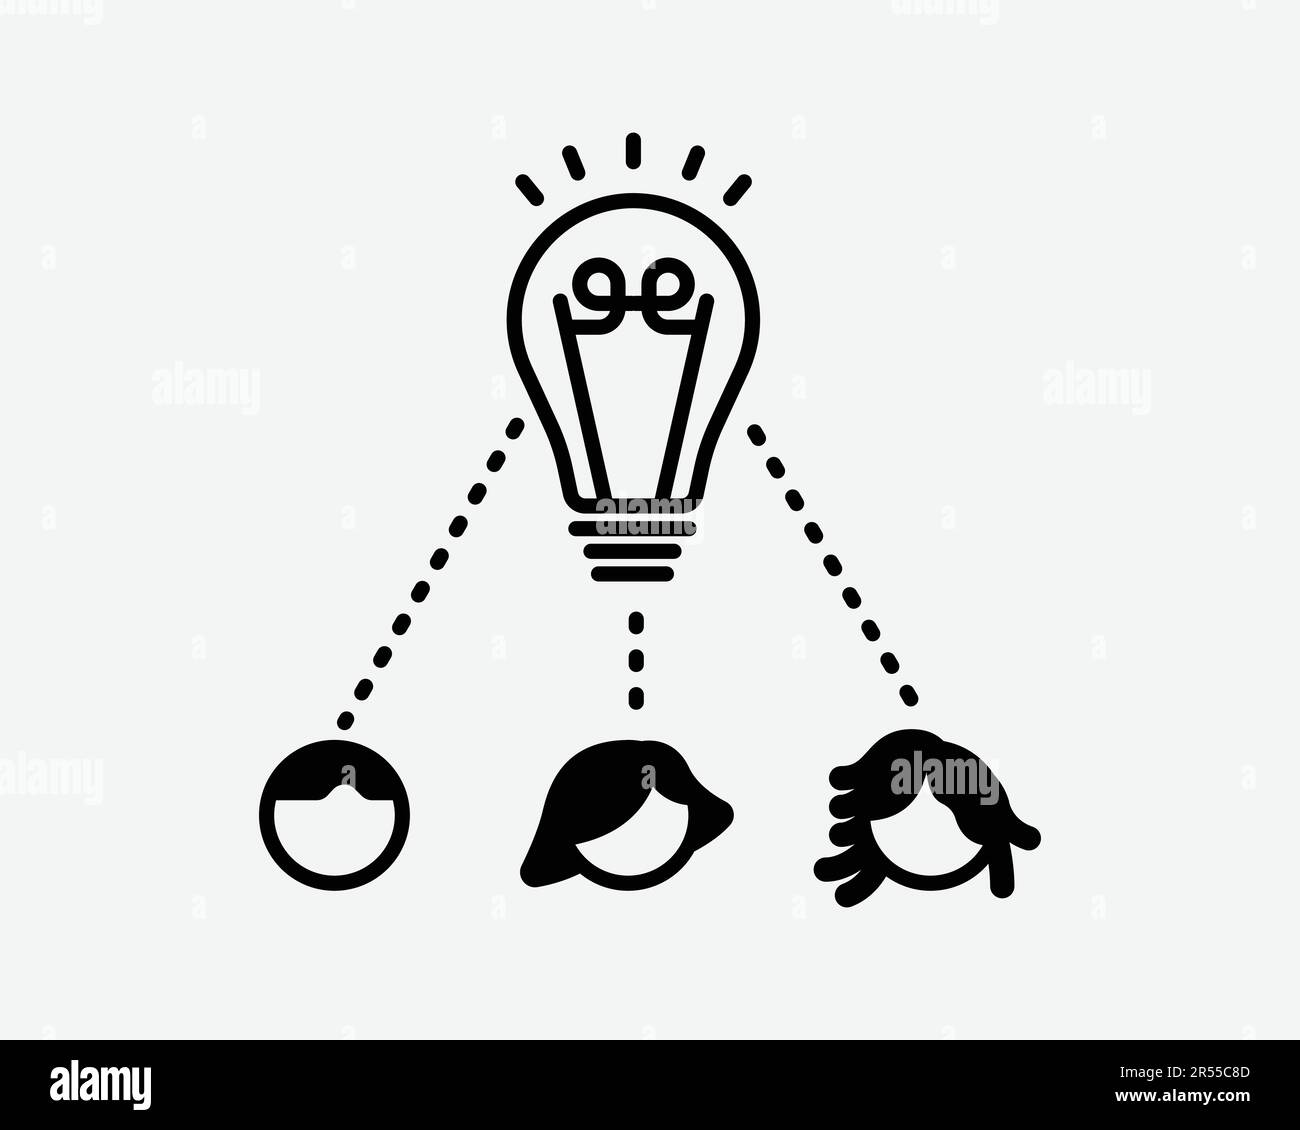 Brainstorm Icon. Group Team Teamwork Idea Think Creative Collaboration Light Bulb Sign Symbol Black Artwork Graphic Illustration Clipart EPS Vector Stock Vector